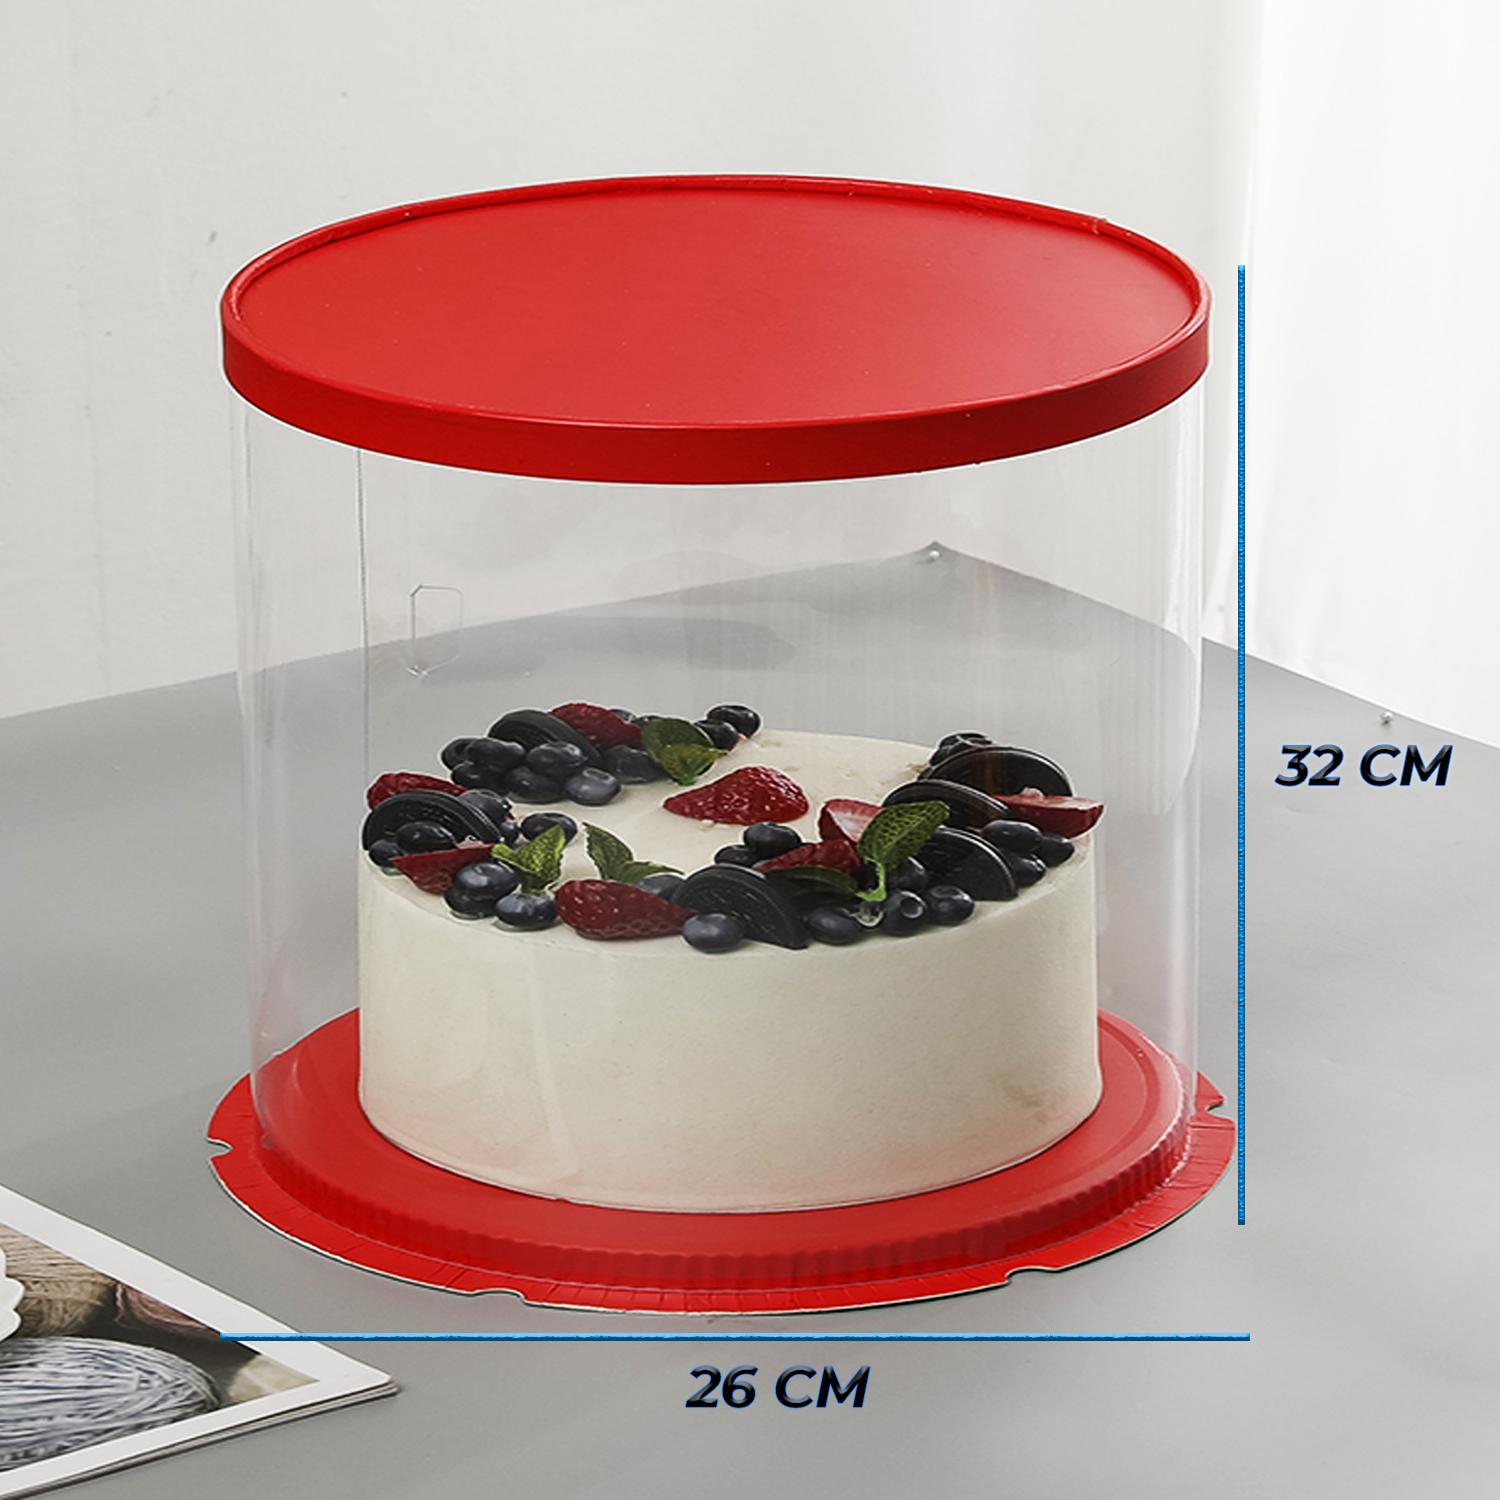 ROUND PVC CAKE BOX RED LID 26*26*32CM